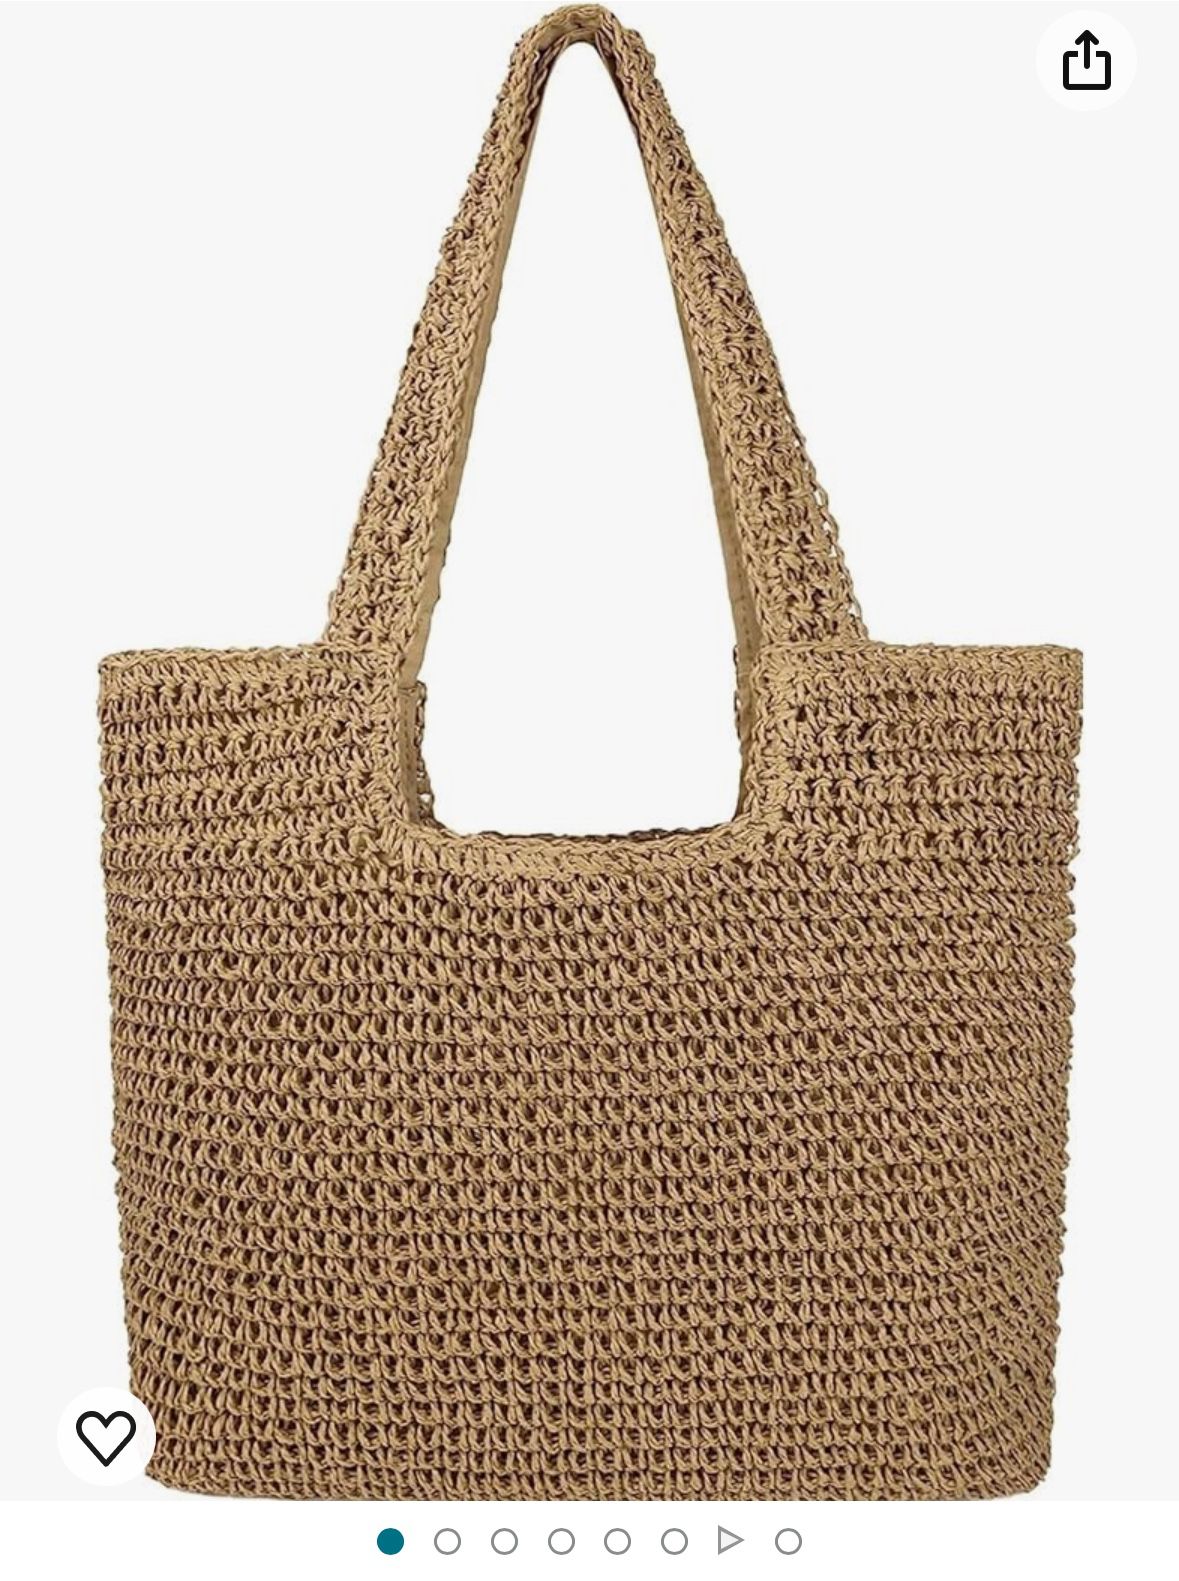 Women's Handle Straw Clutch bag,Summer Woven Tote Bag Beach Bags, Envelope Wallet Handbags For Girls